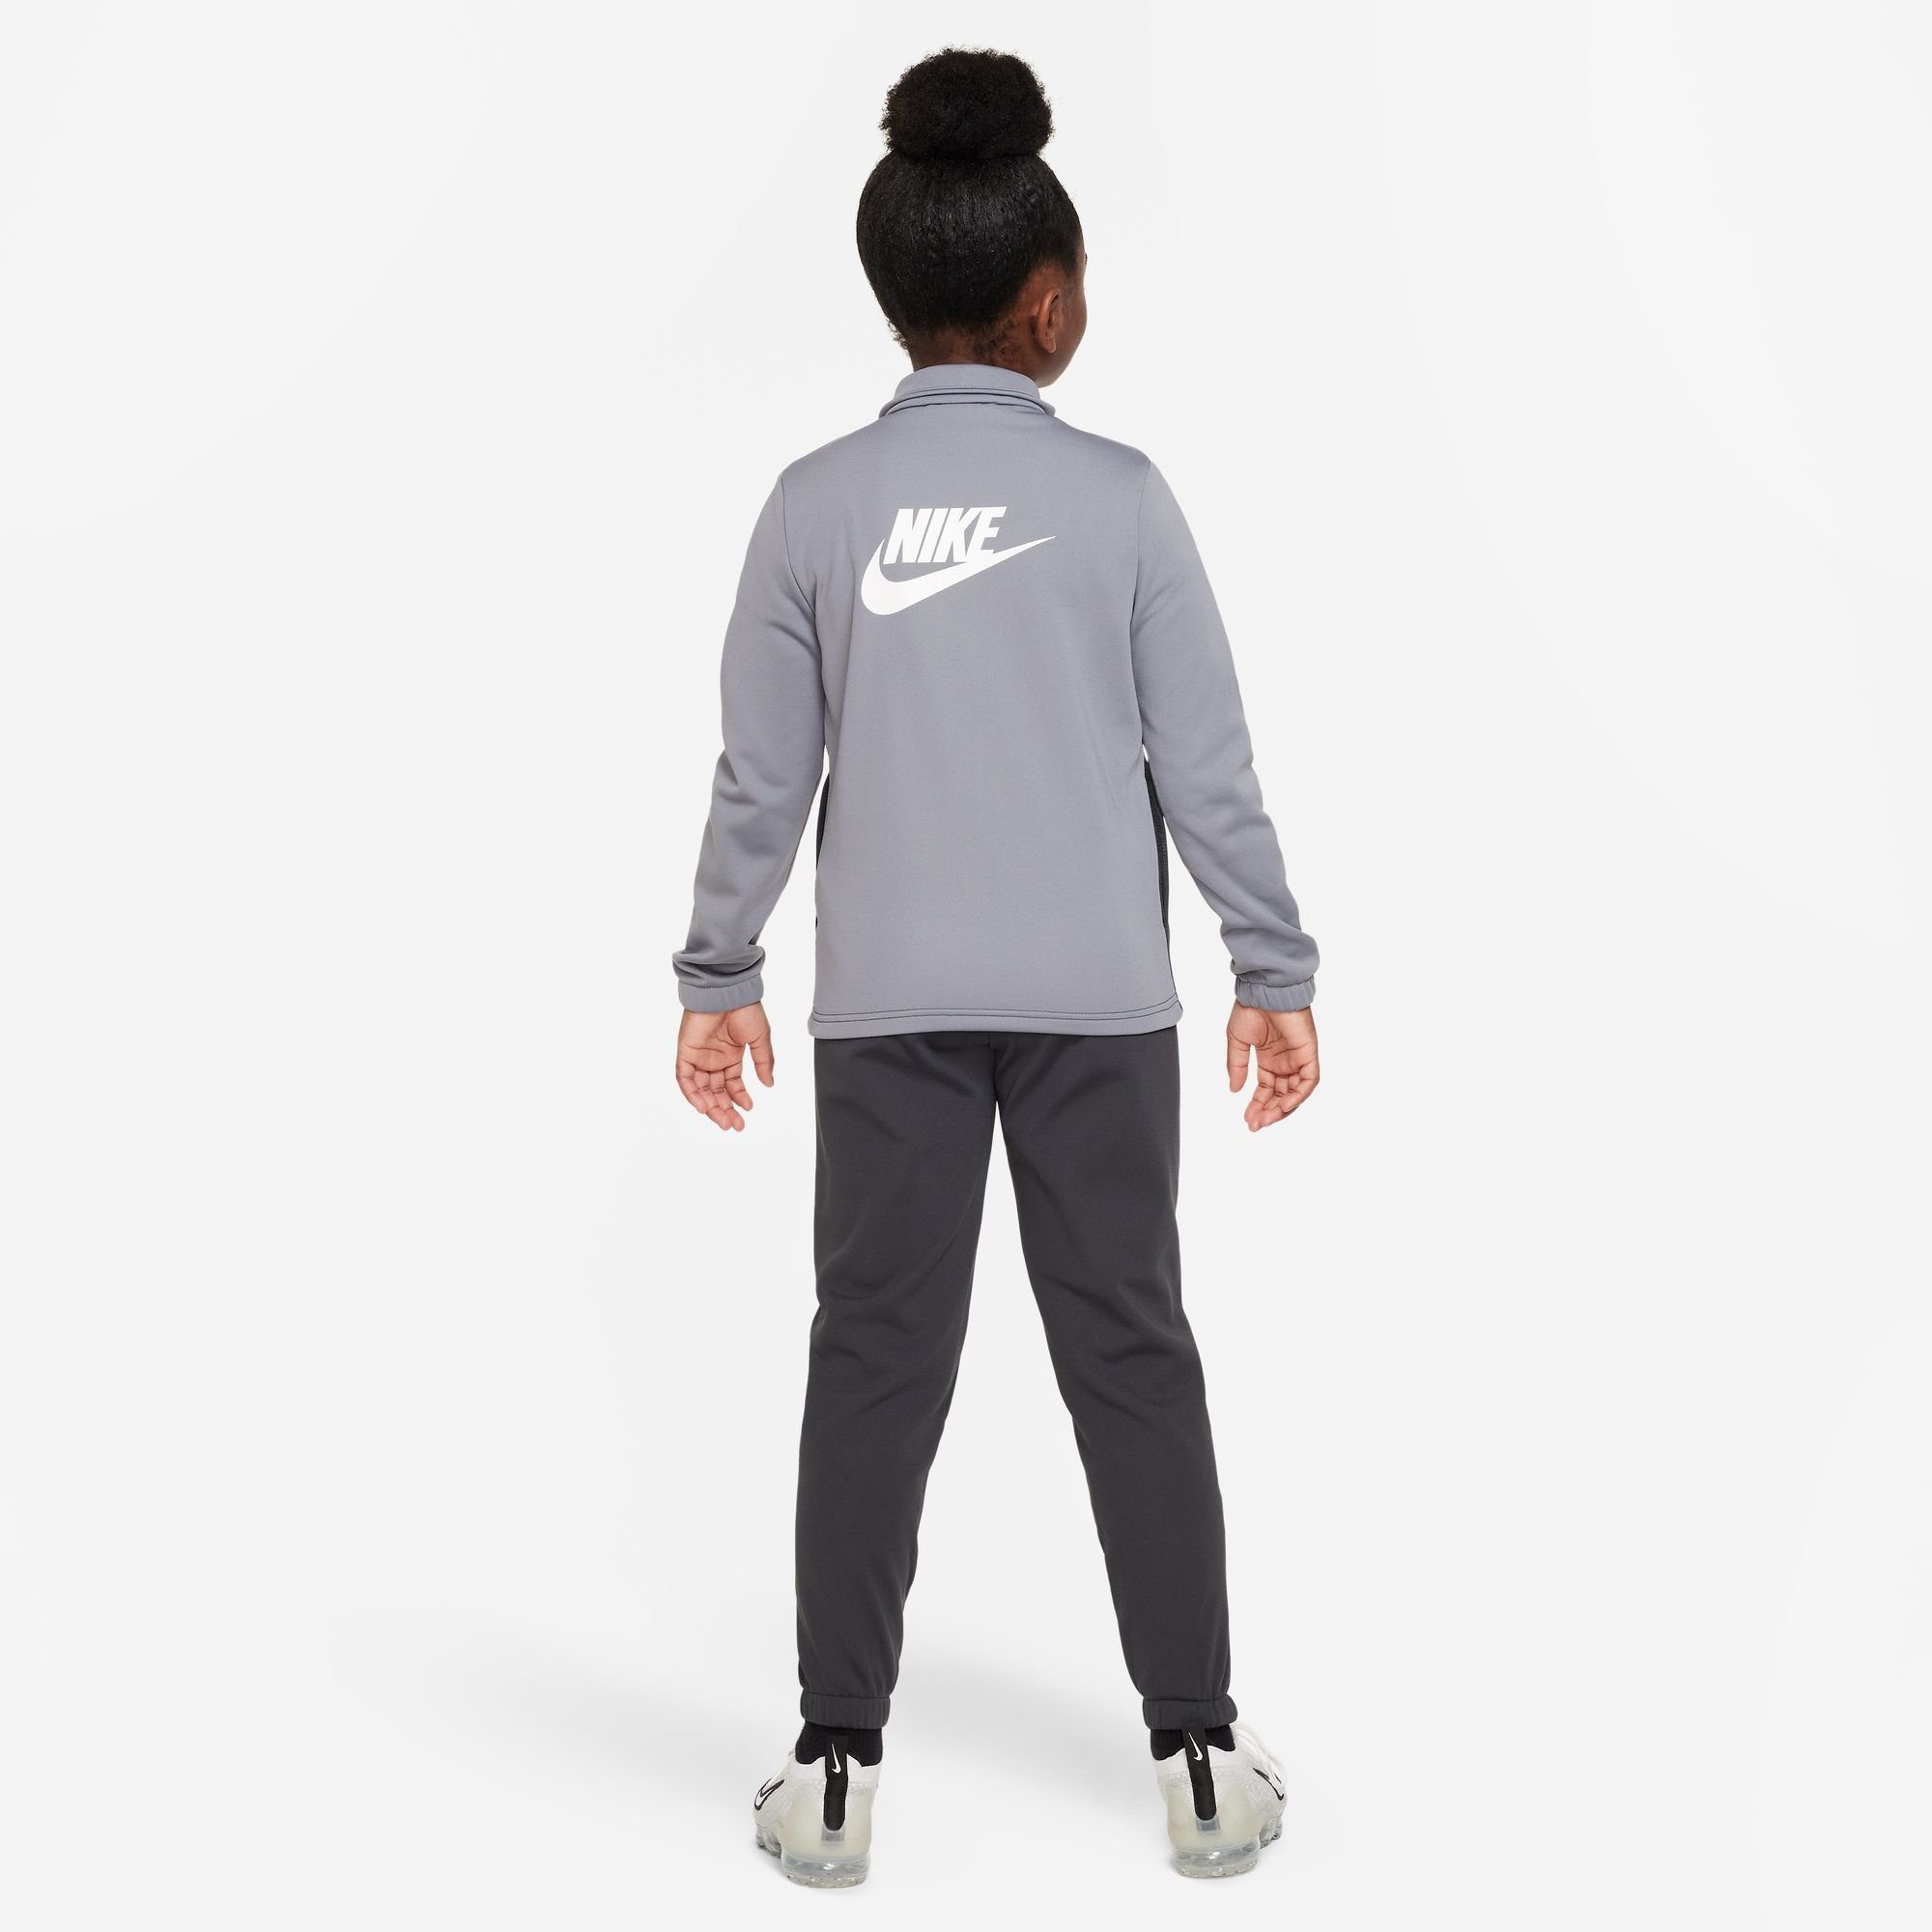 SMOKE TRACKSUIT GREY/ANTHRACITE/WHITE KIDS' Trainingsanzug Sportswear BIG Nike